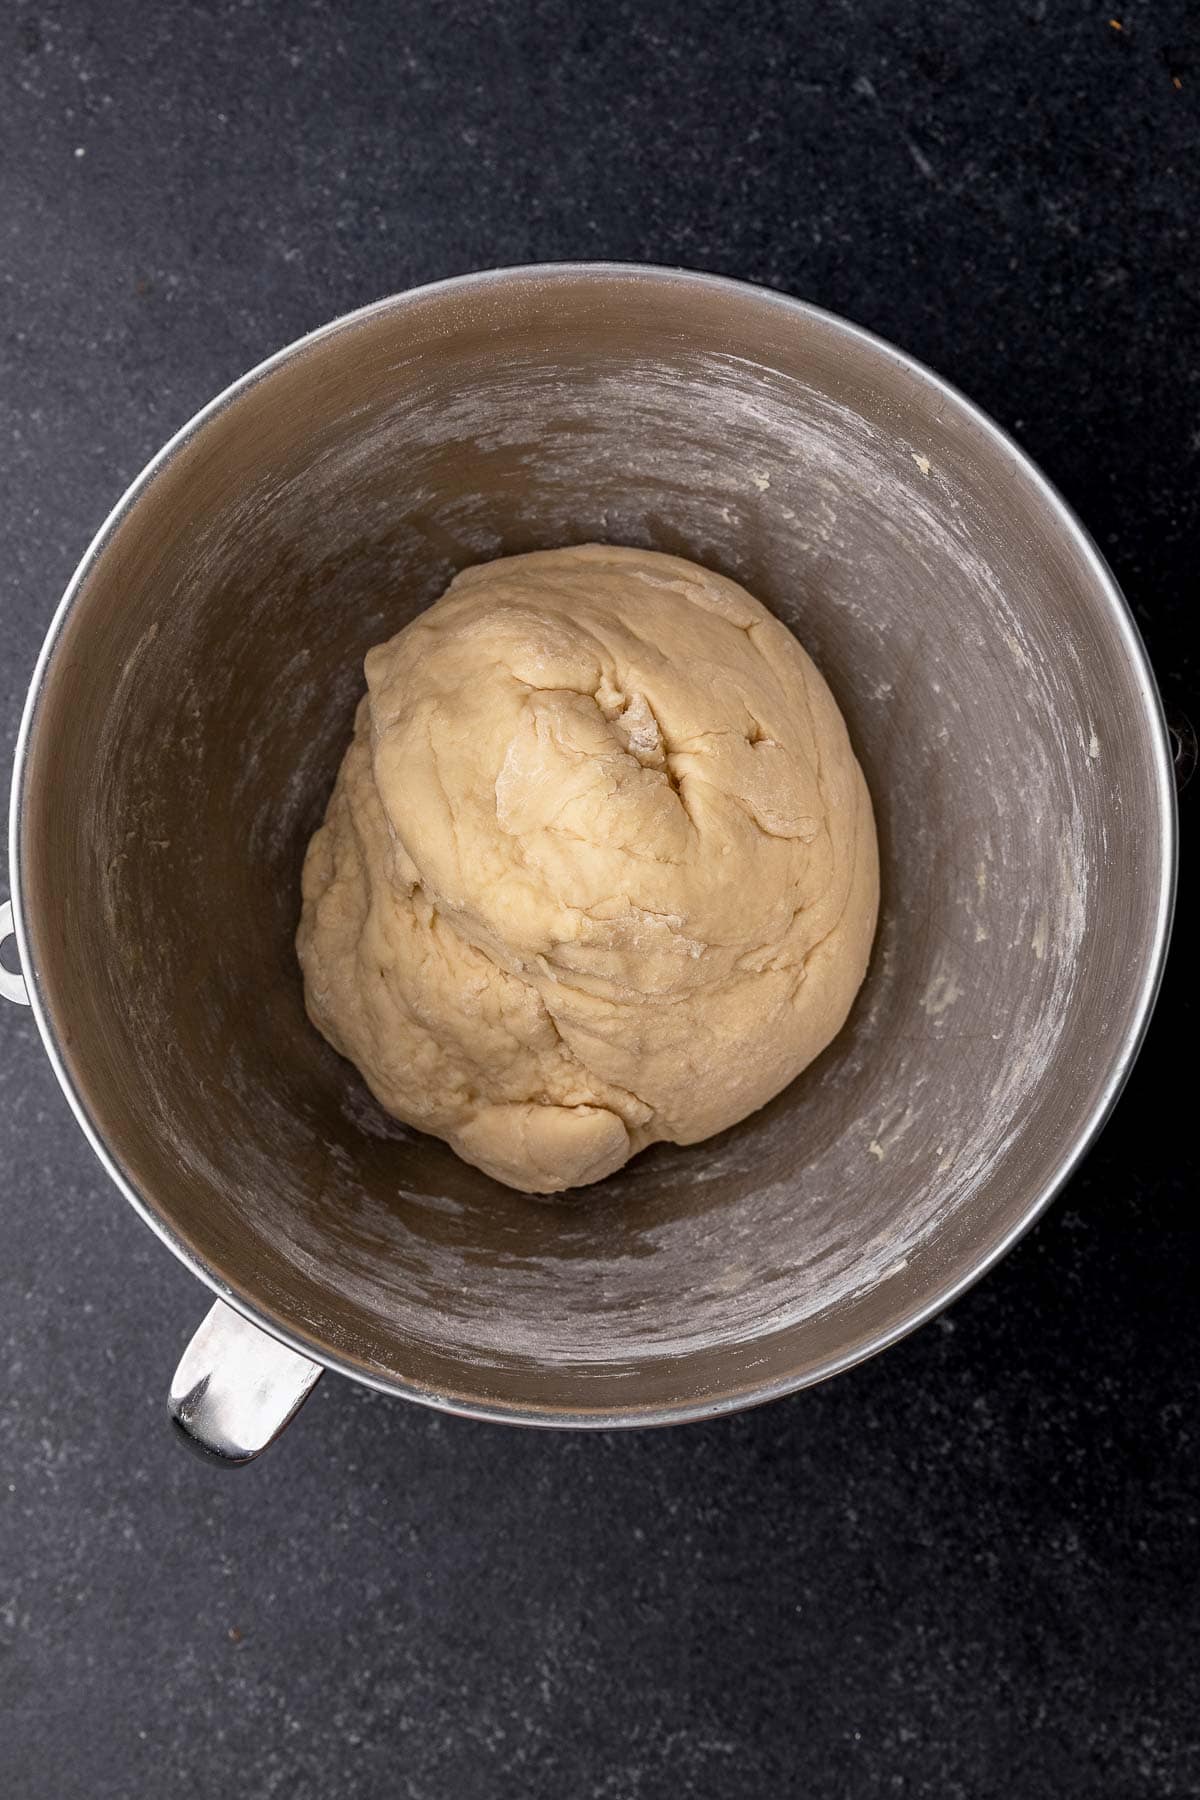 Giant Cinnamon Roll dough in bowl